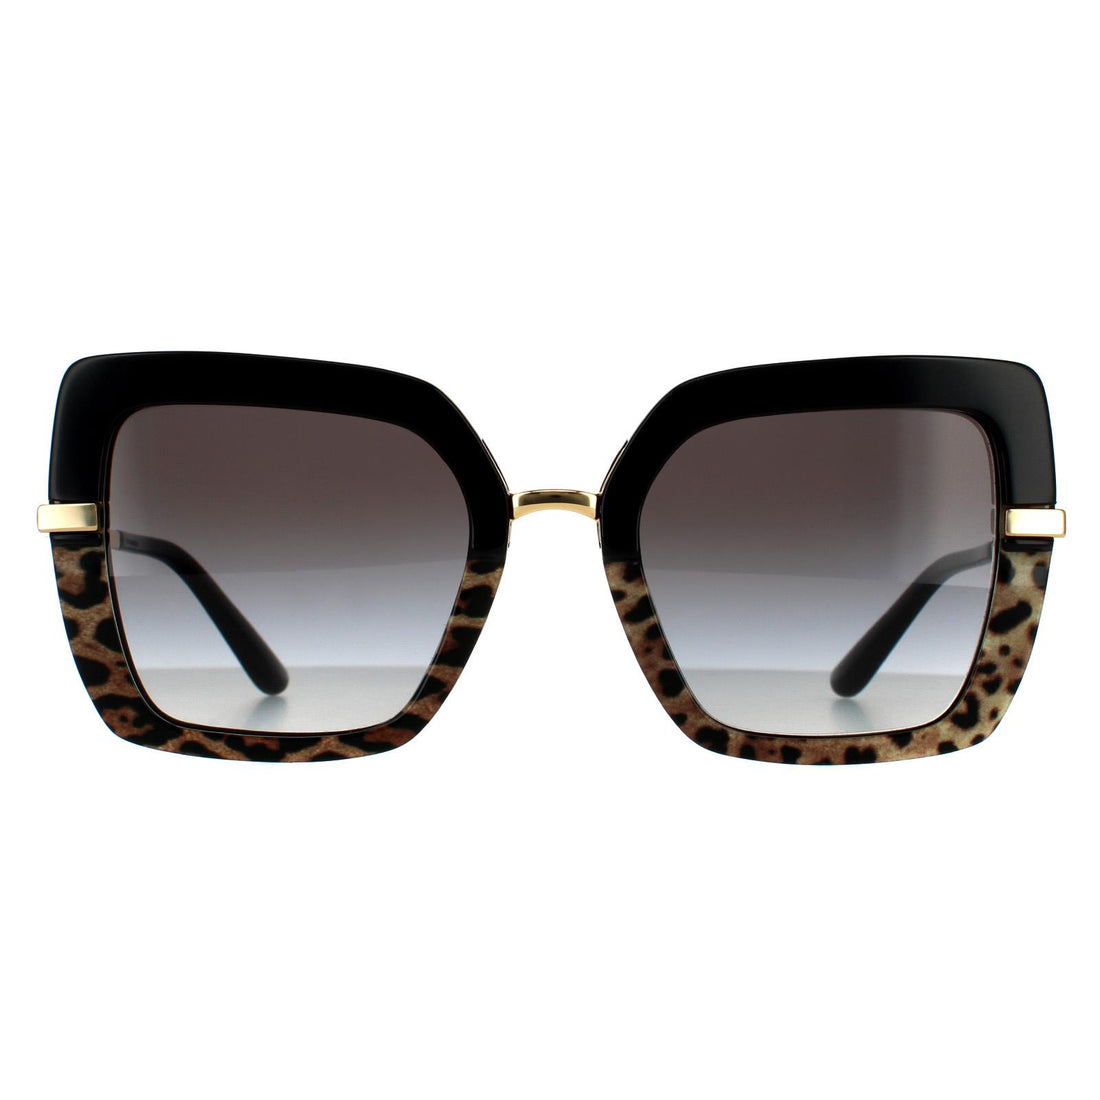 Dolce & Gabbana Sunglasses DG4373 32448G Top Black on Print Leopard Black Grey Gradient